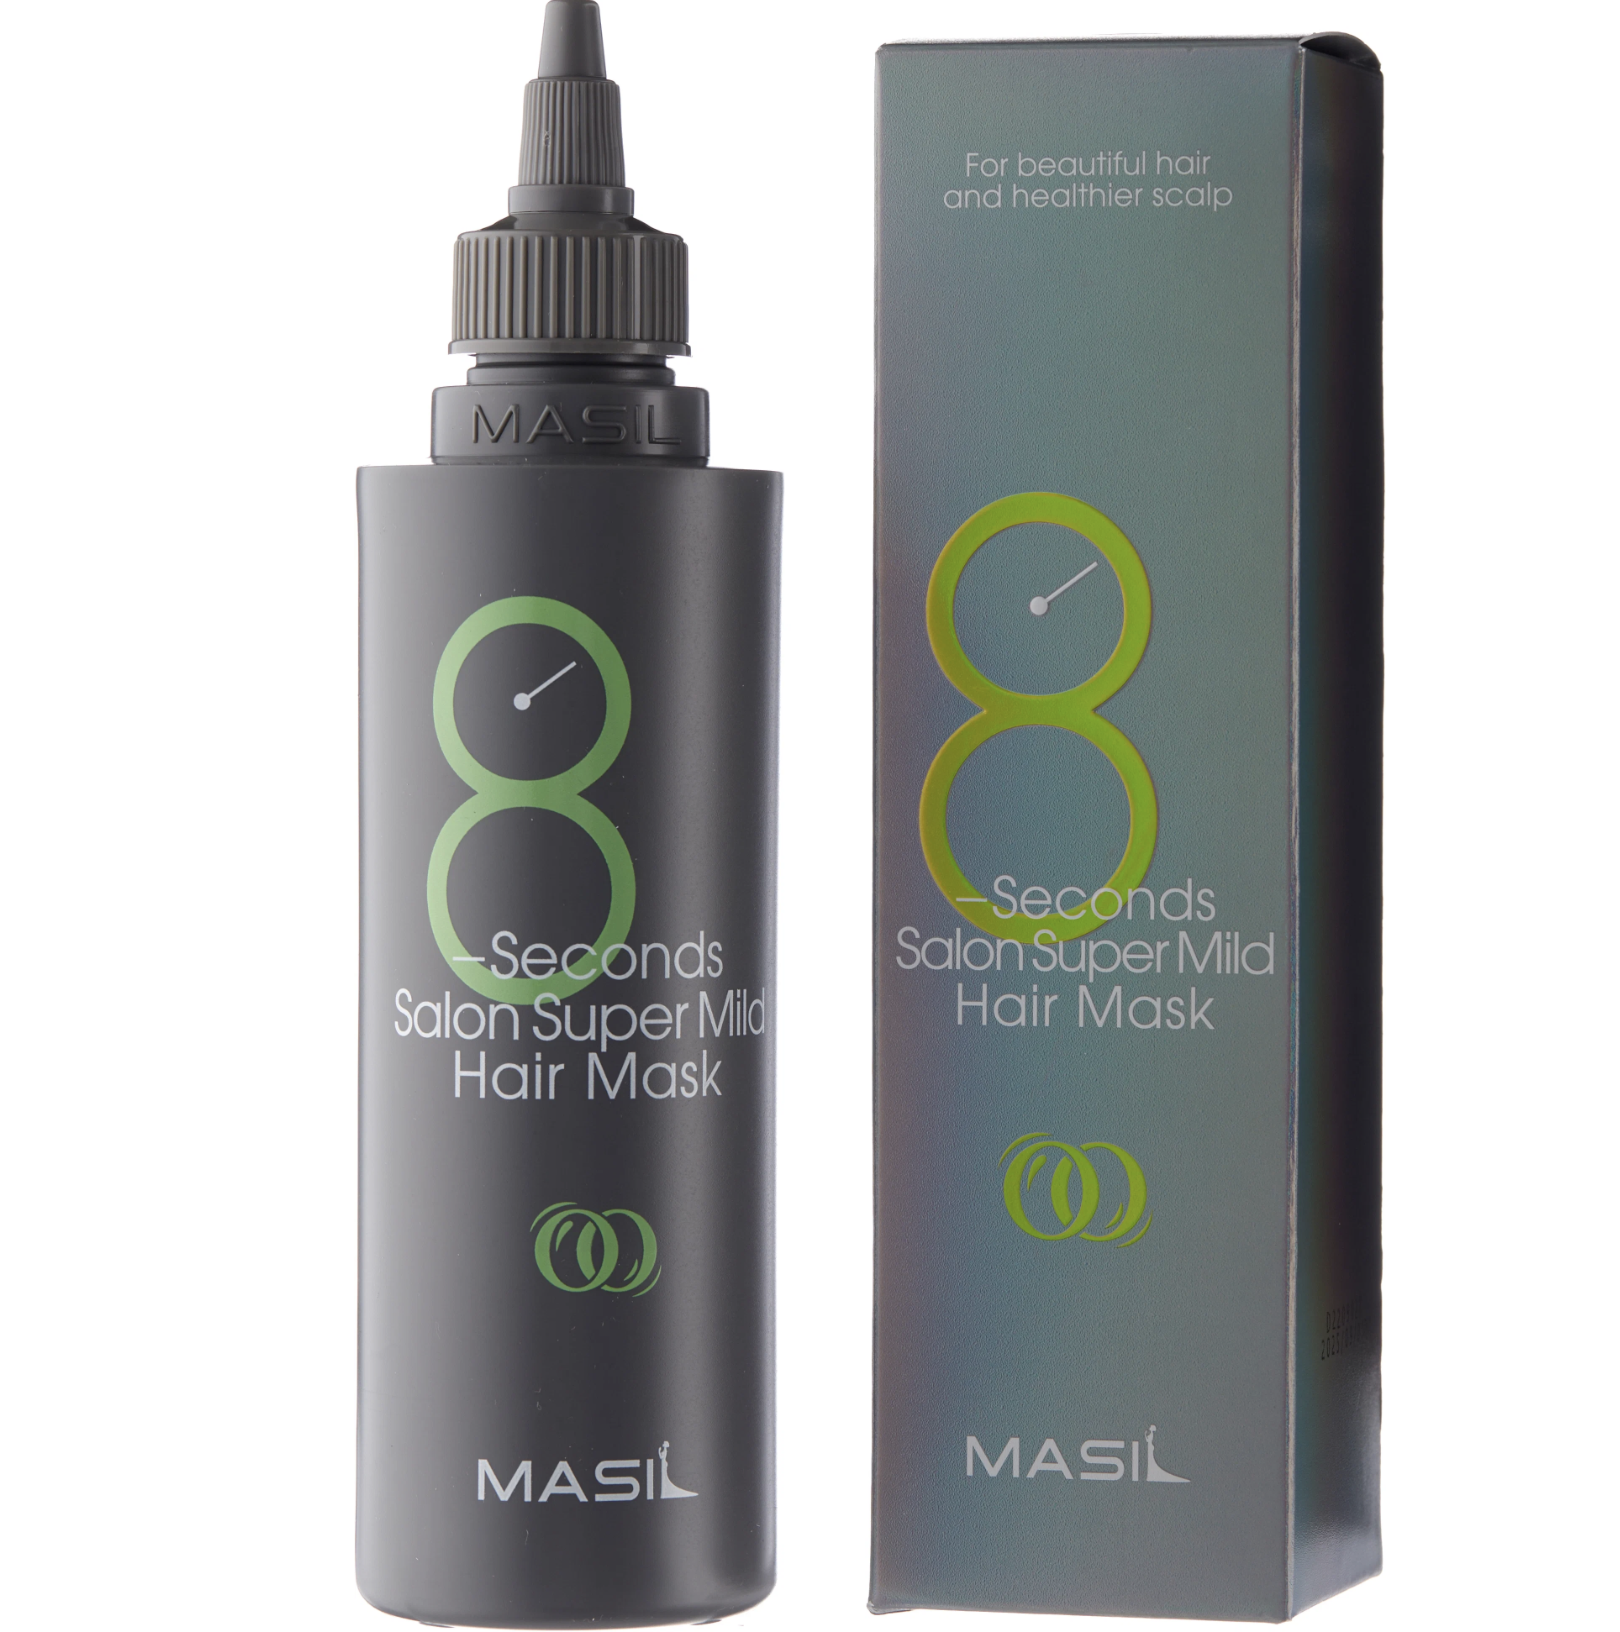   / Masil -     8 Seconds Salon Super Mild Hair Mask 200 